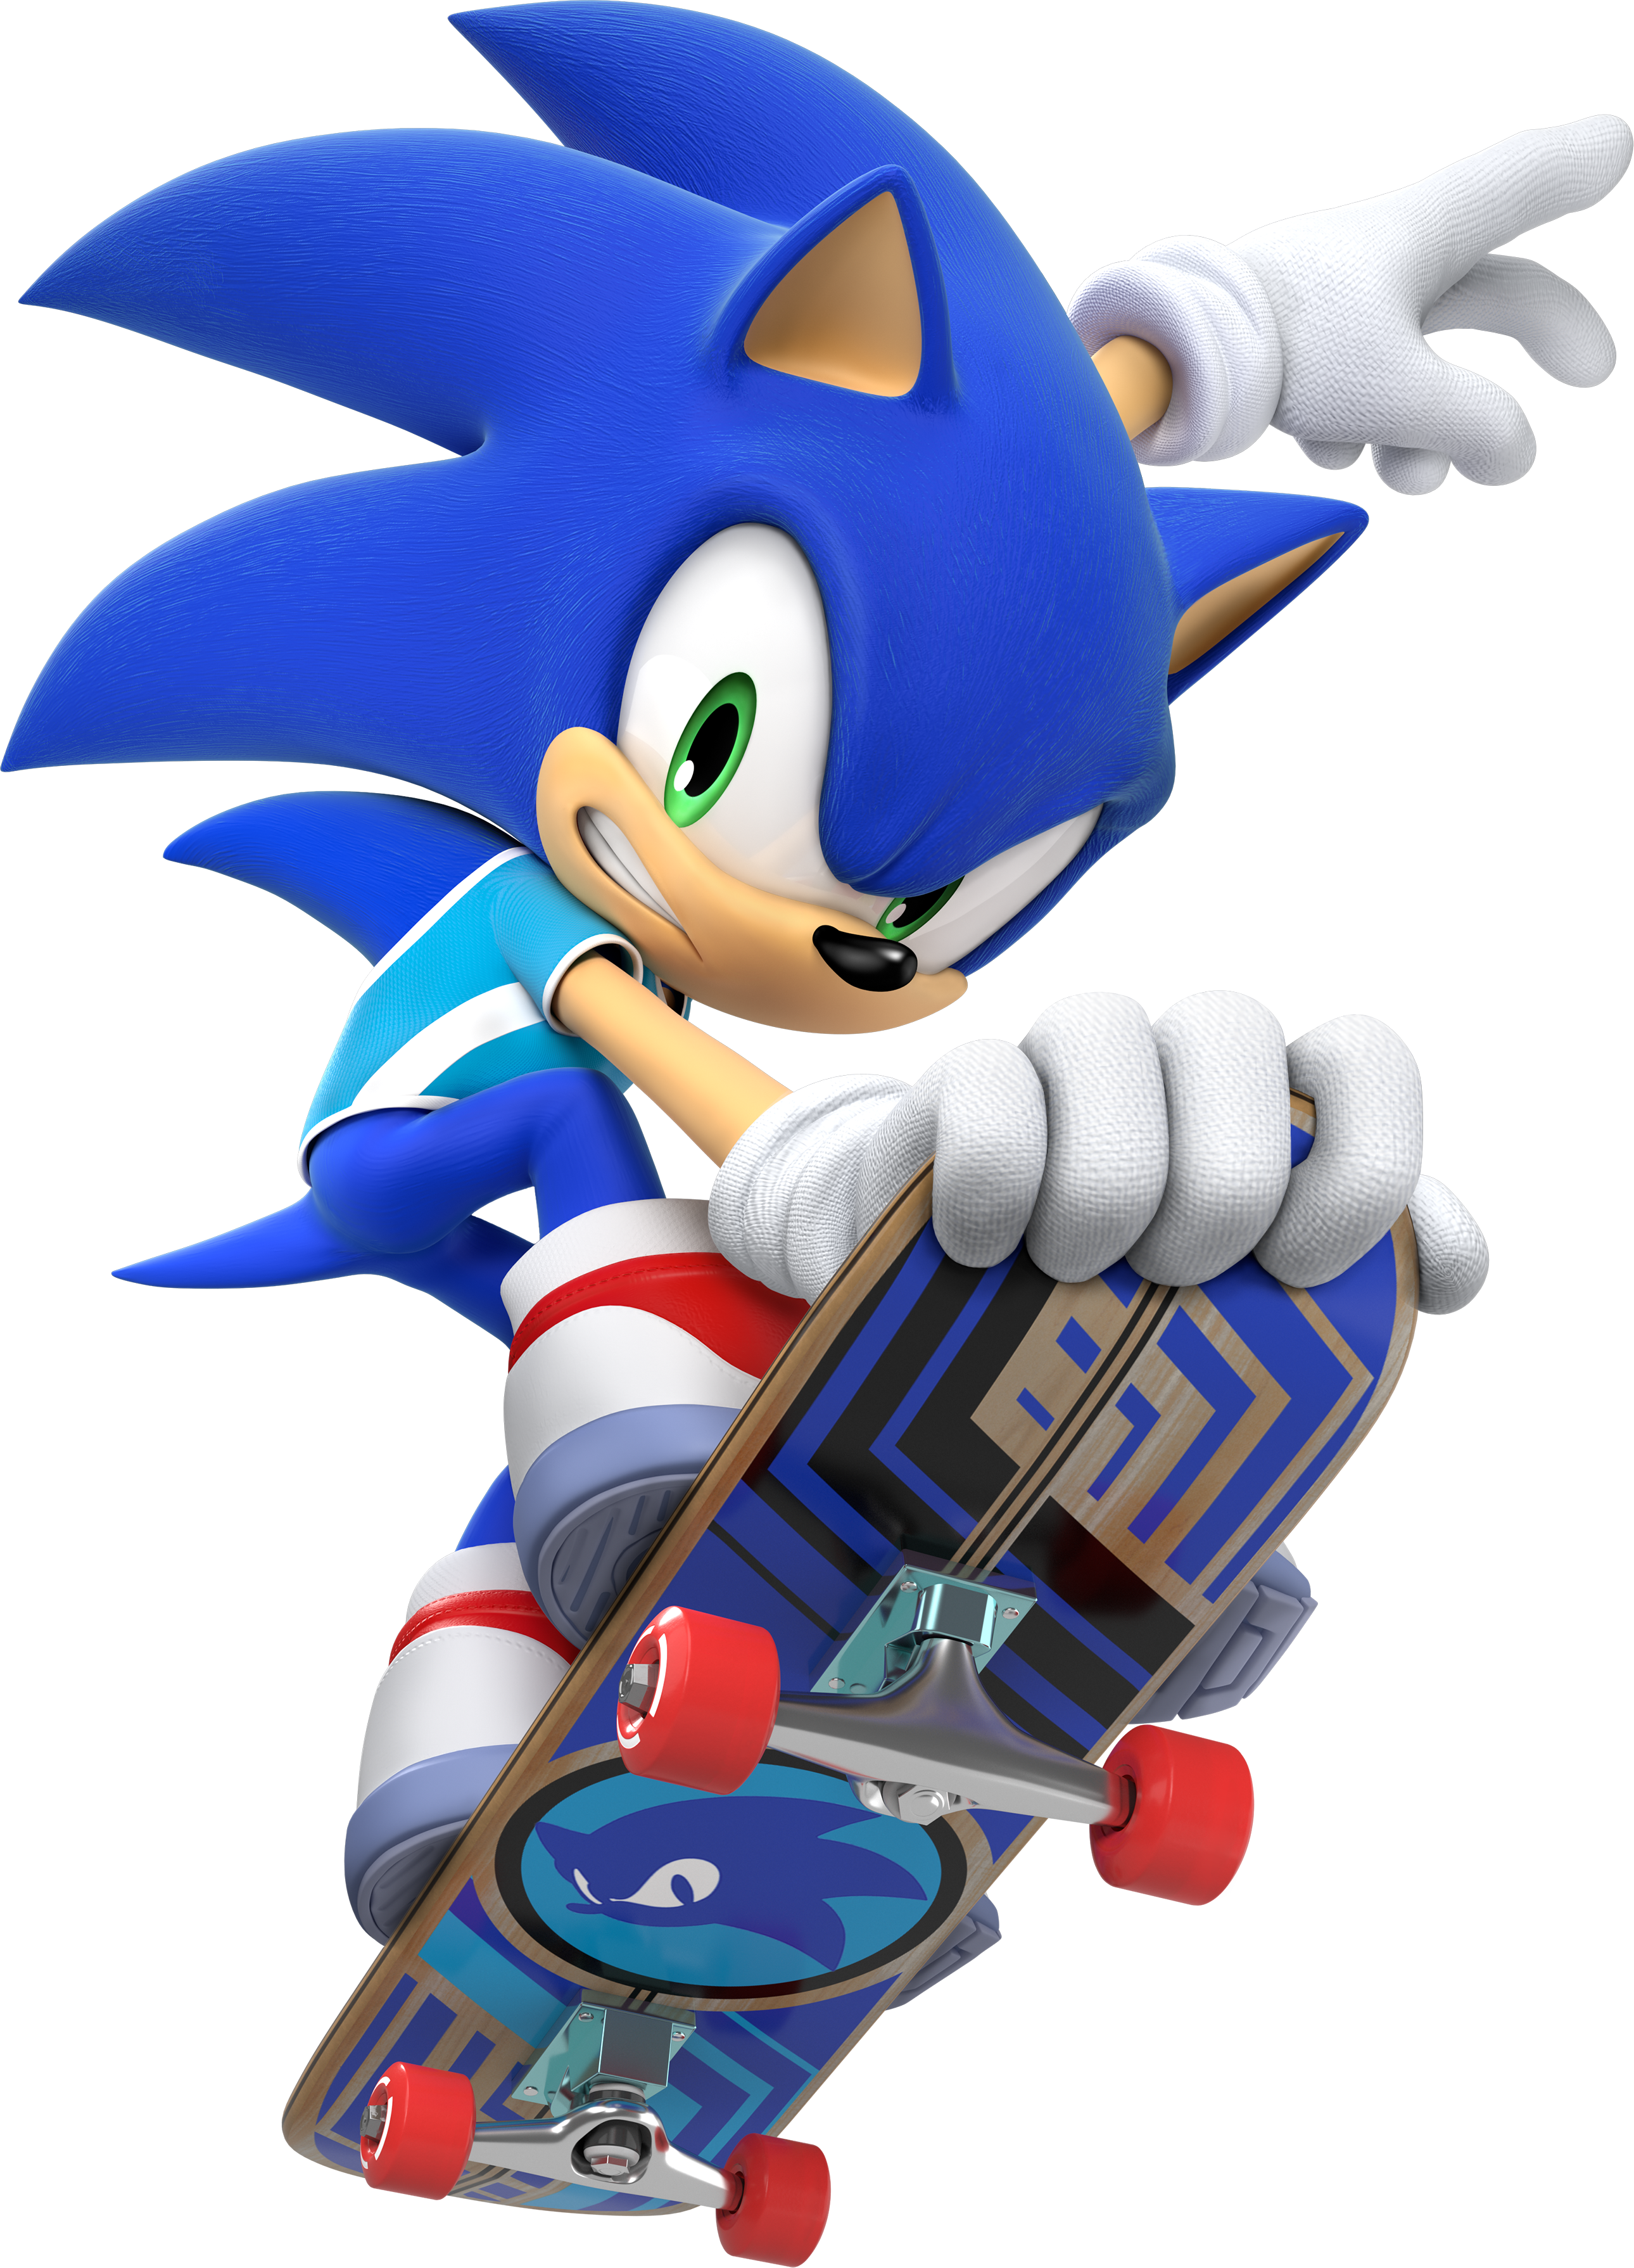 Shadow the Hedgehog (Sonic Adventure 2: Battle) by Sonic-Konga on